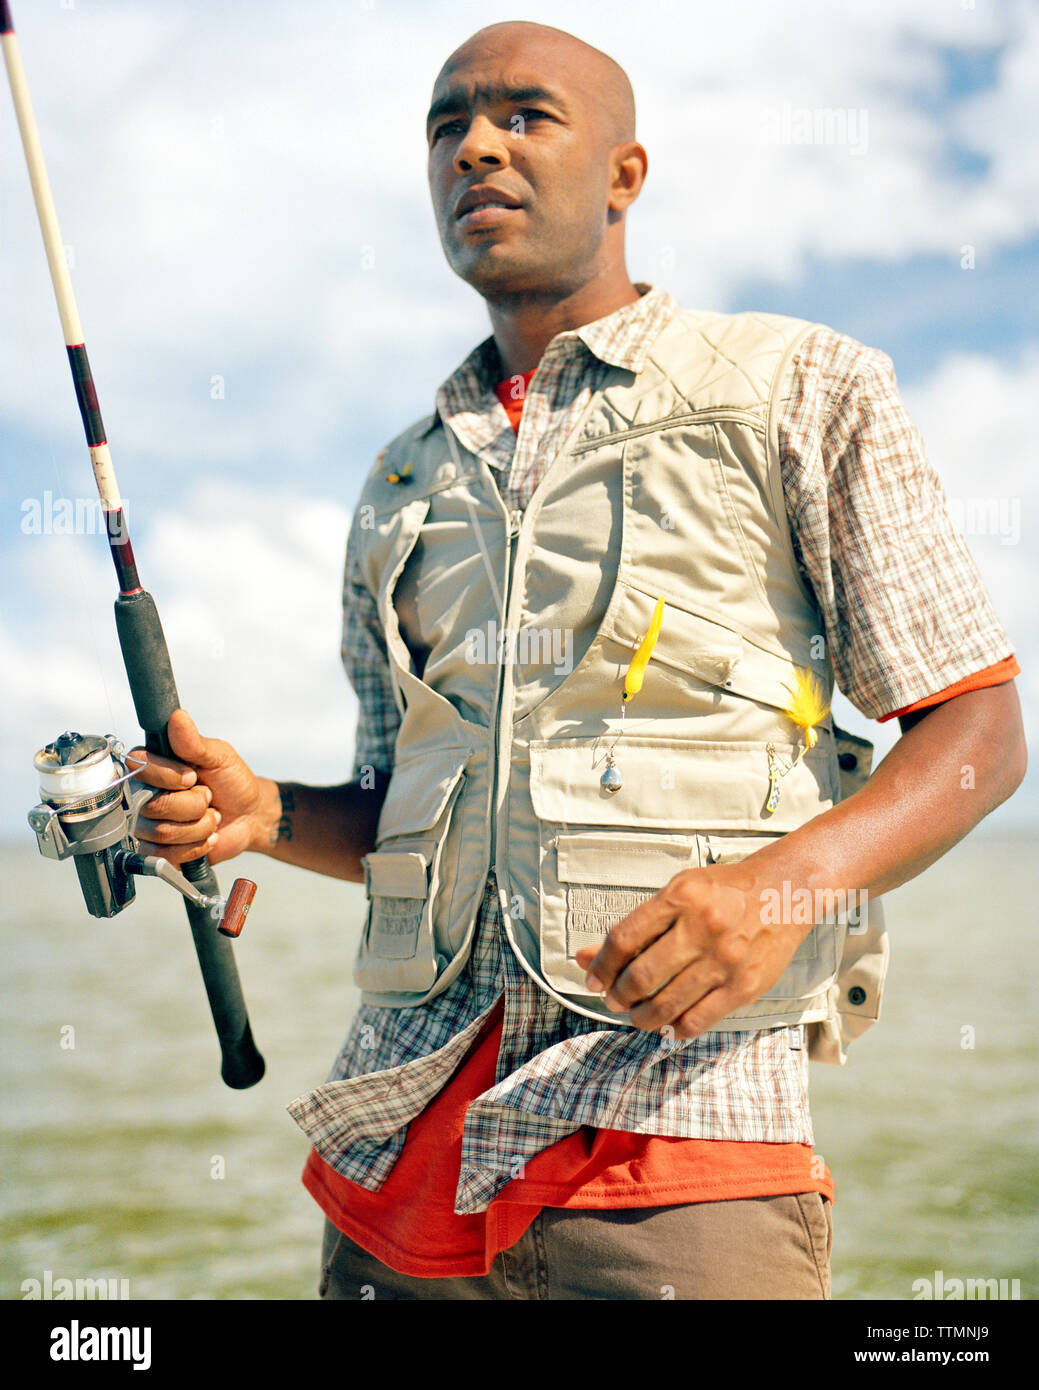 https://c8.alamy.com/comp/TTMNJ9/usa-florida-man-holding-fishing-rod-ivory-keys-TTMNJ9.jpg